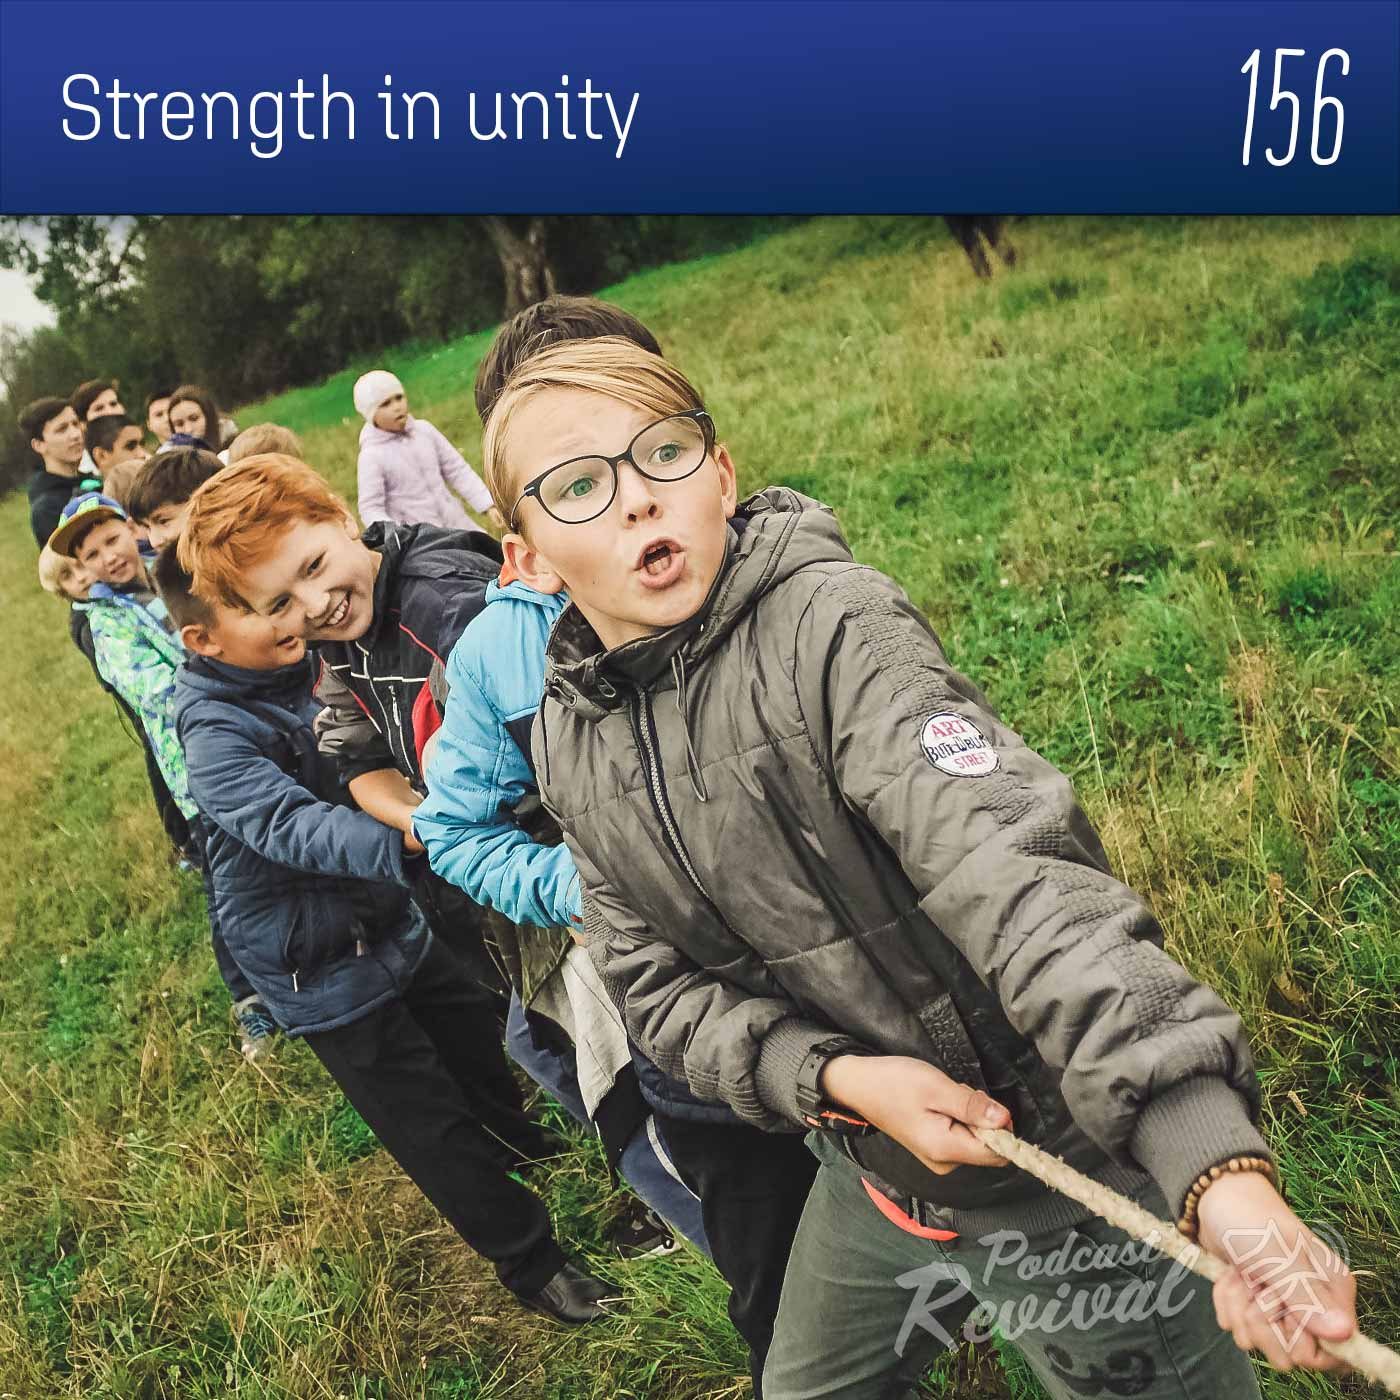 Strength in unity - Pr Chris Kernahan - 156